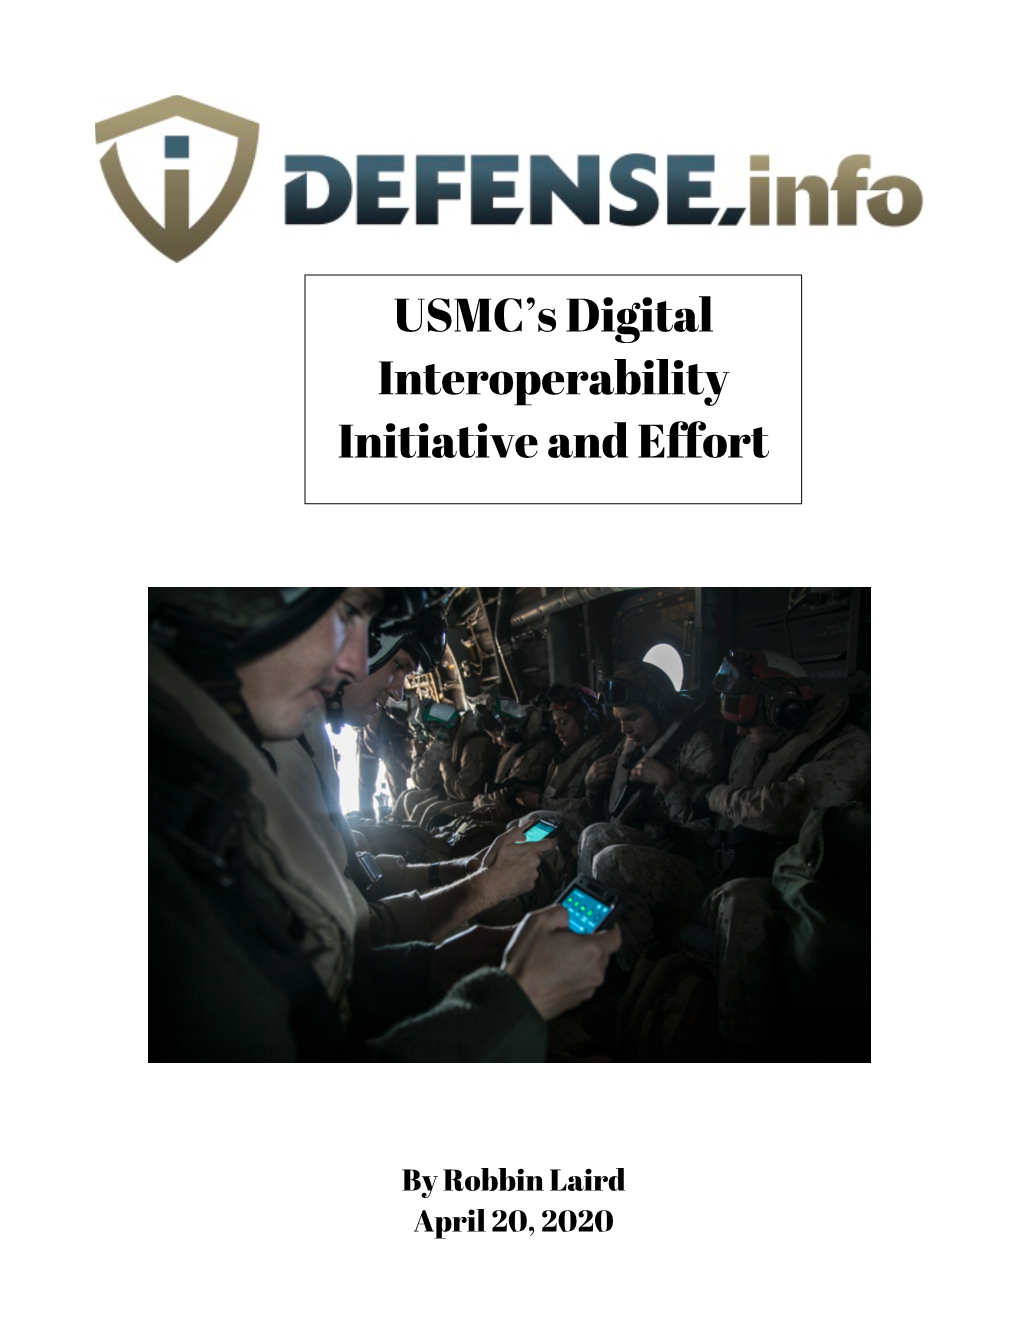 USMC Digital Interoperability Effort